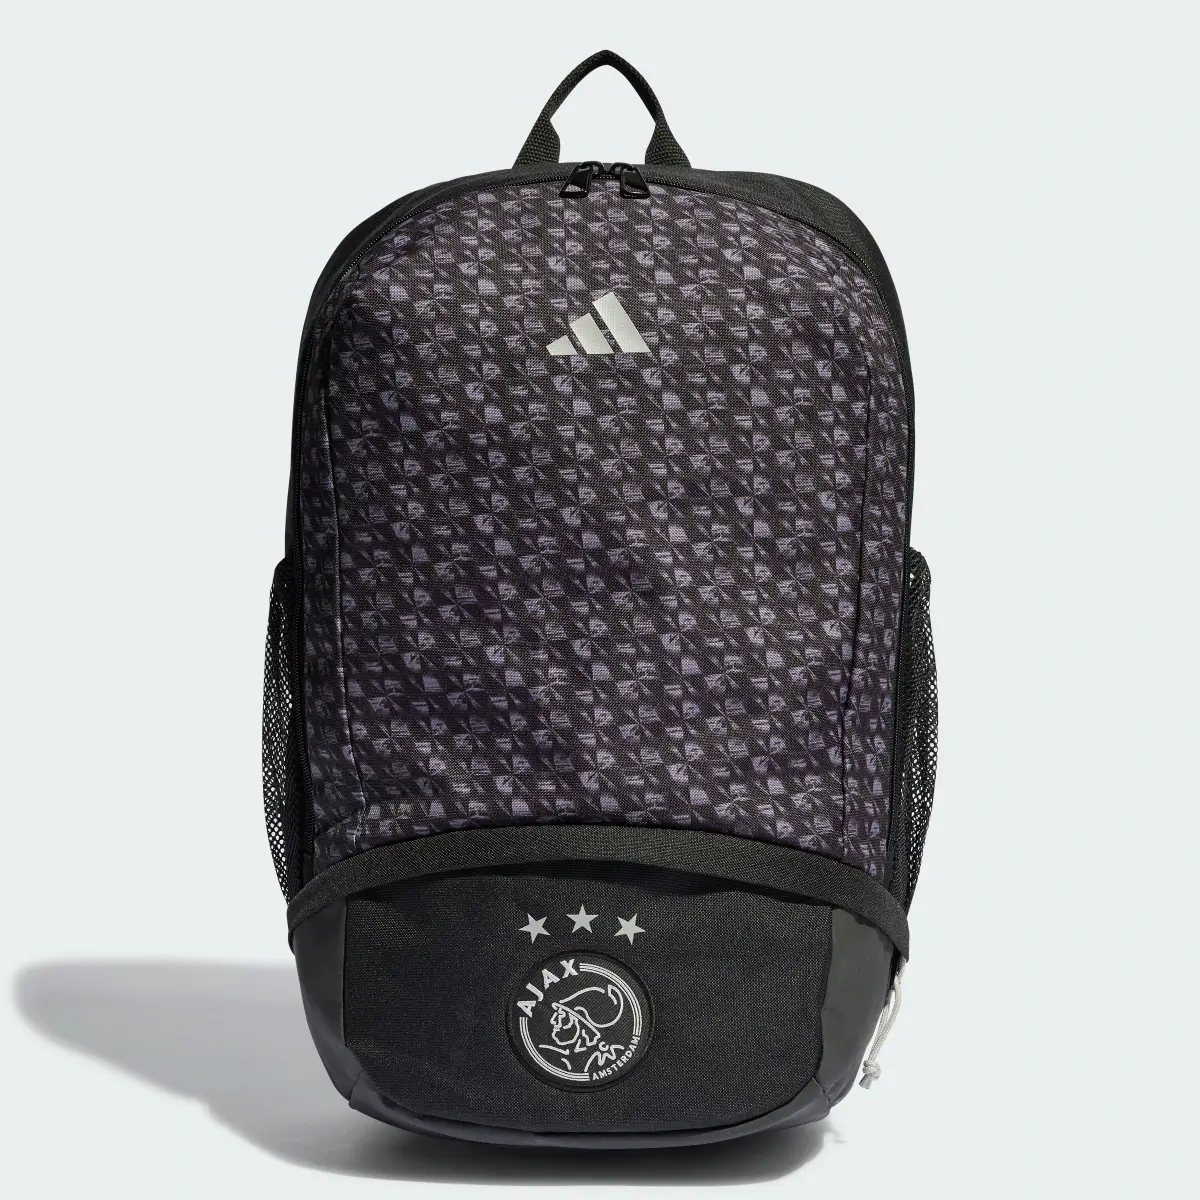 Adidas Ajax Amsterdam Backpack. 1